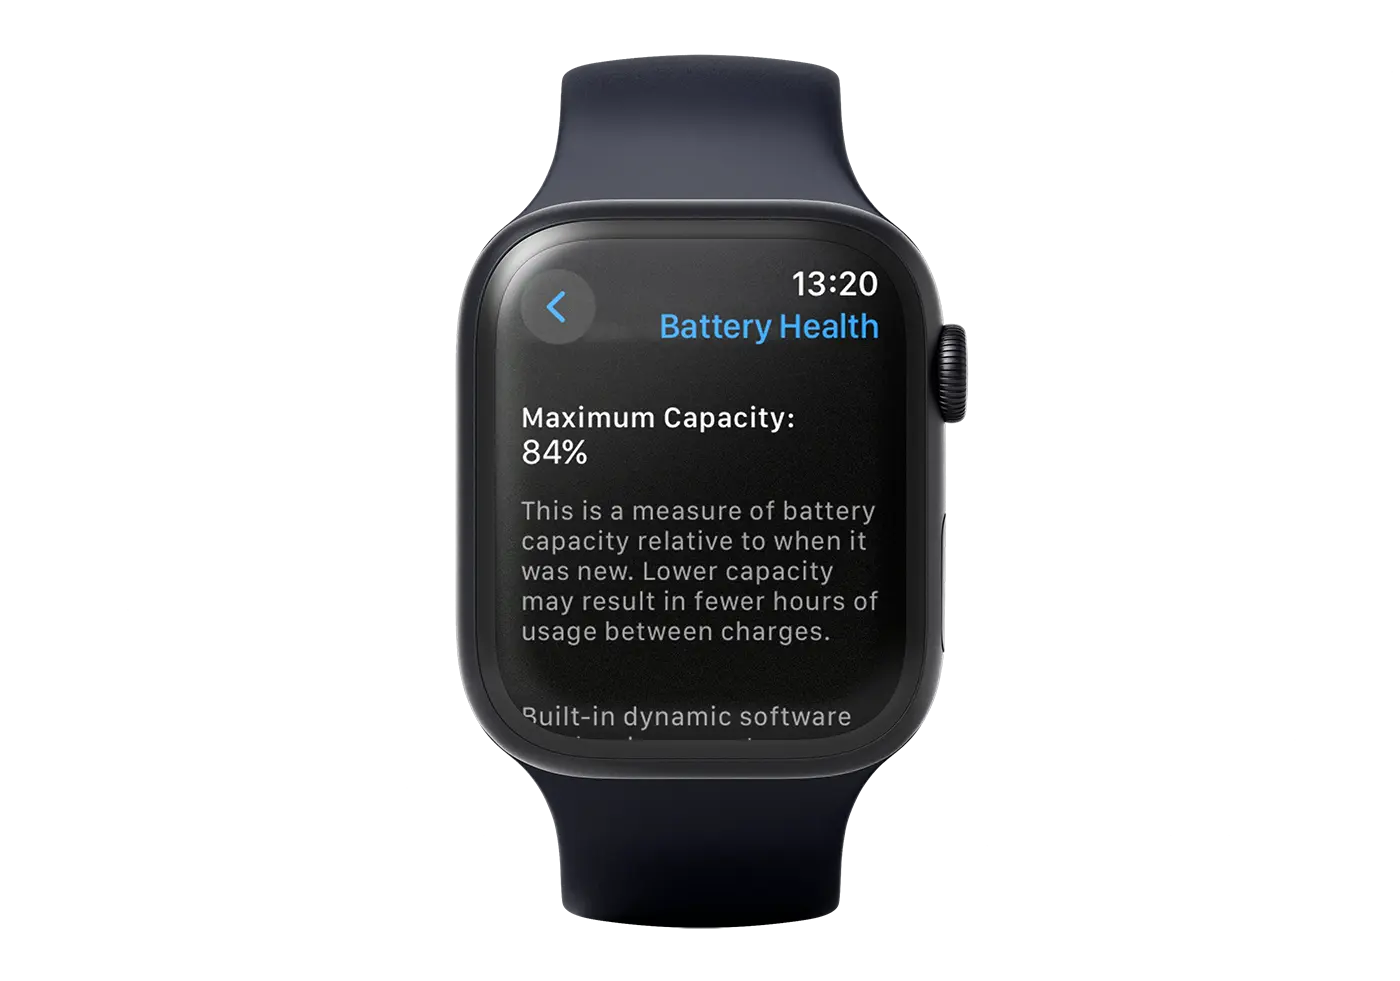 Battery Health on Apple Watch - Maximum Capacity